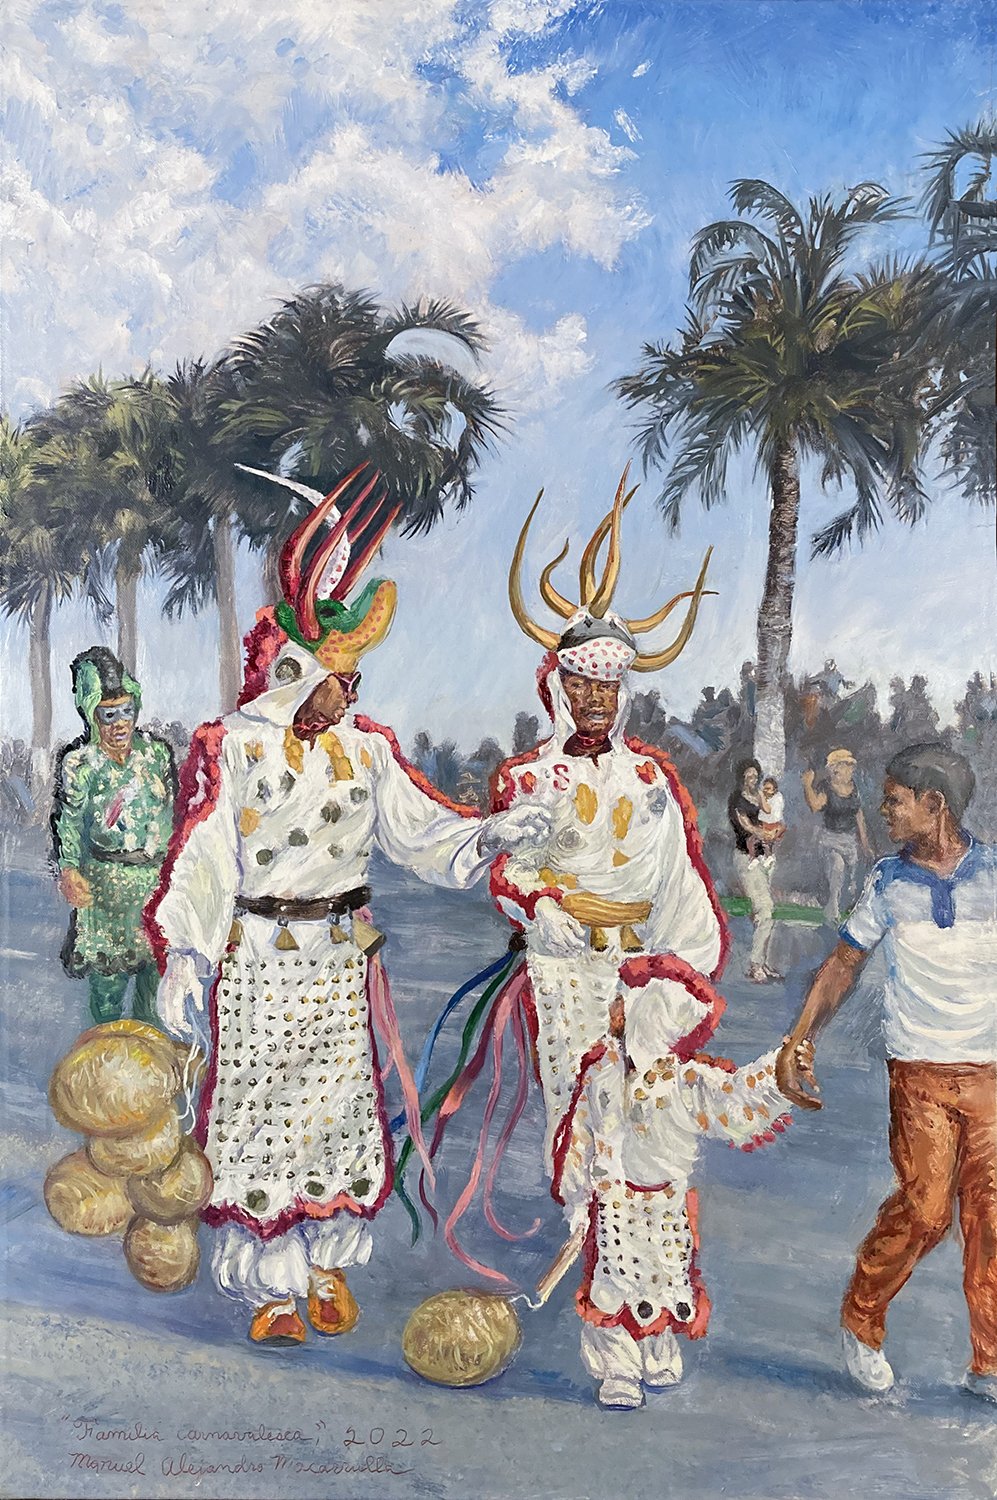    Familia carnavalesca (Carnival Family),     2022. Oil on canvas. 30” X 20”. 